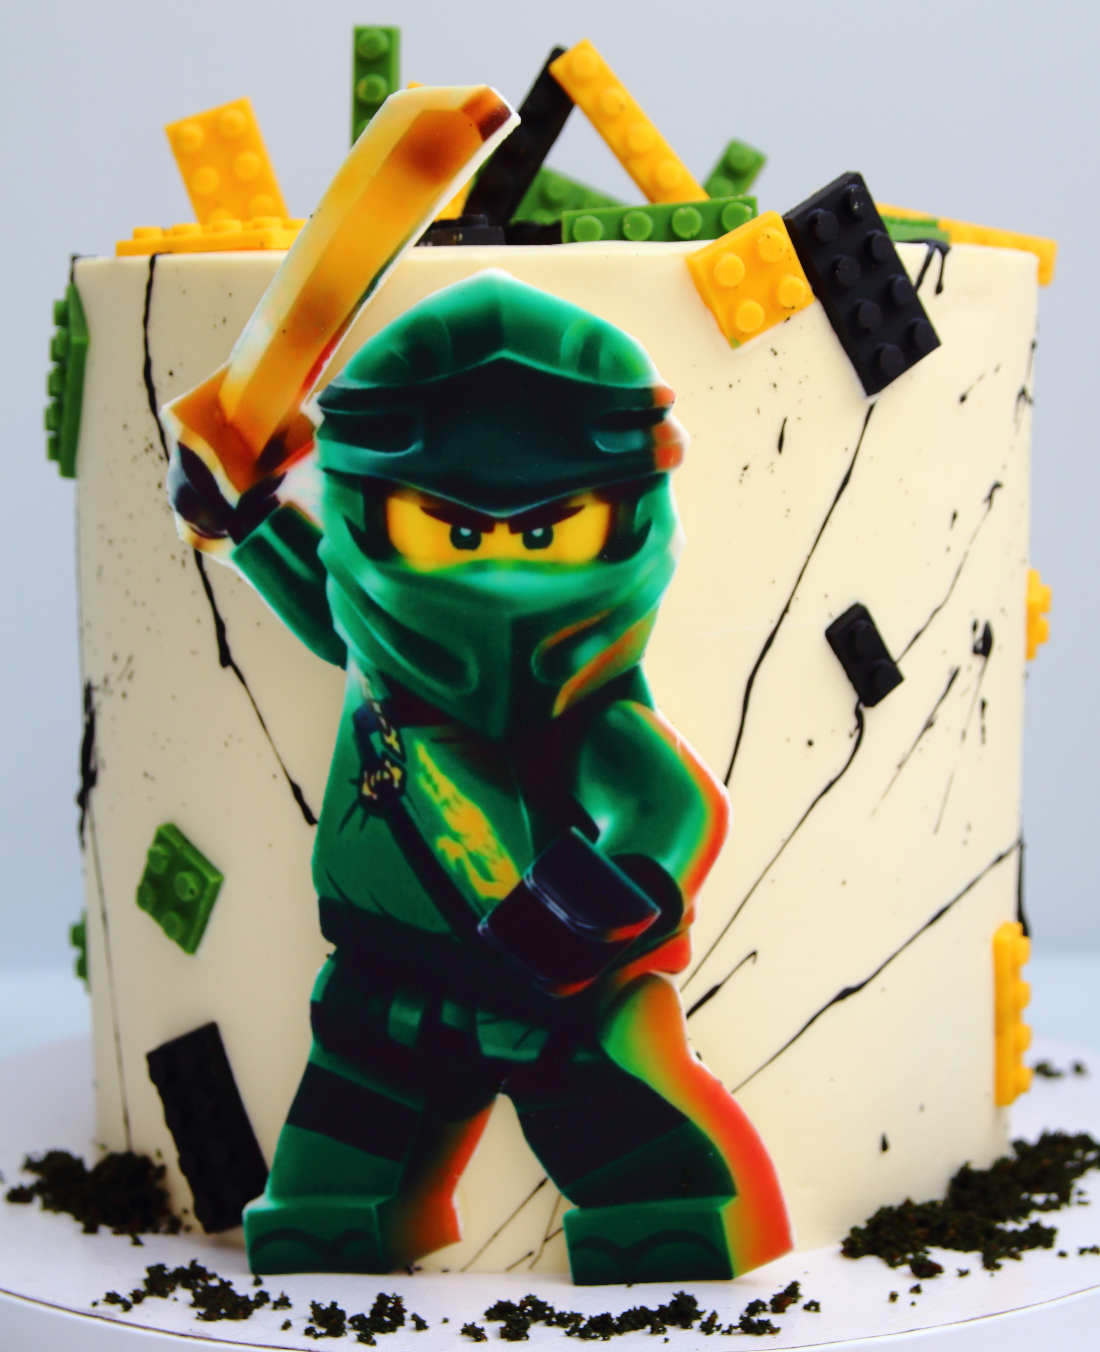 Print Lego Ninjago characters on cake